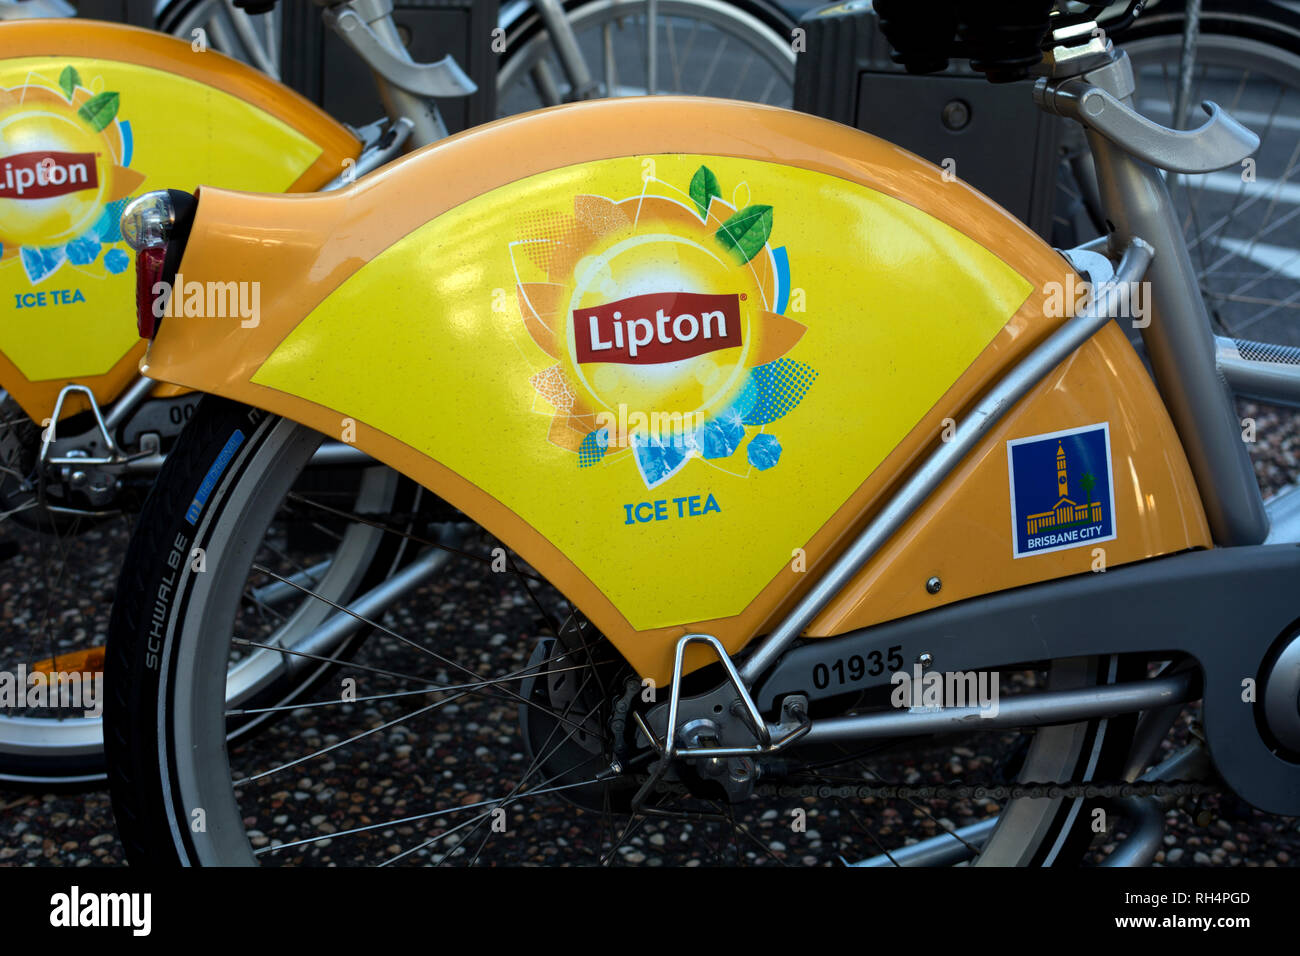 Lipton Ice Tea advertisement on a Citybike, Brisbane, Queensland, Australia Stock Photo